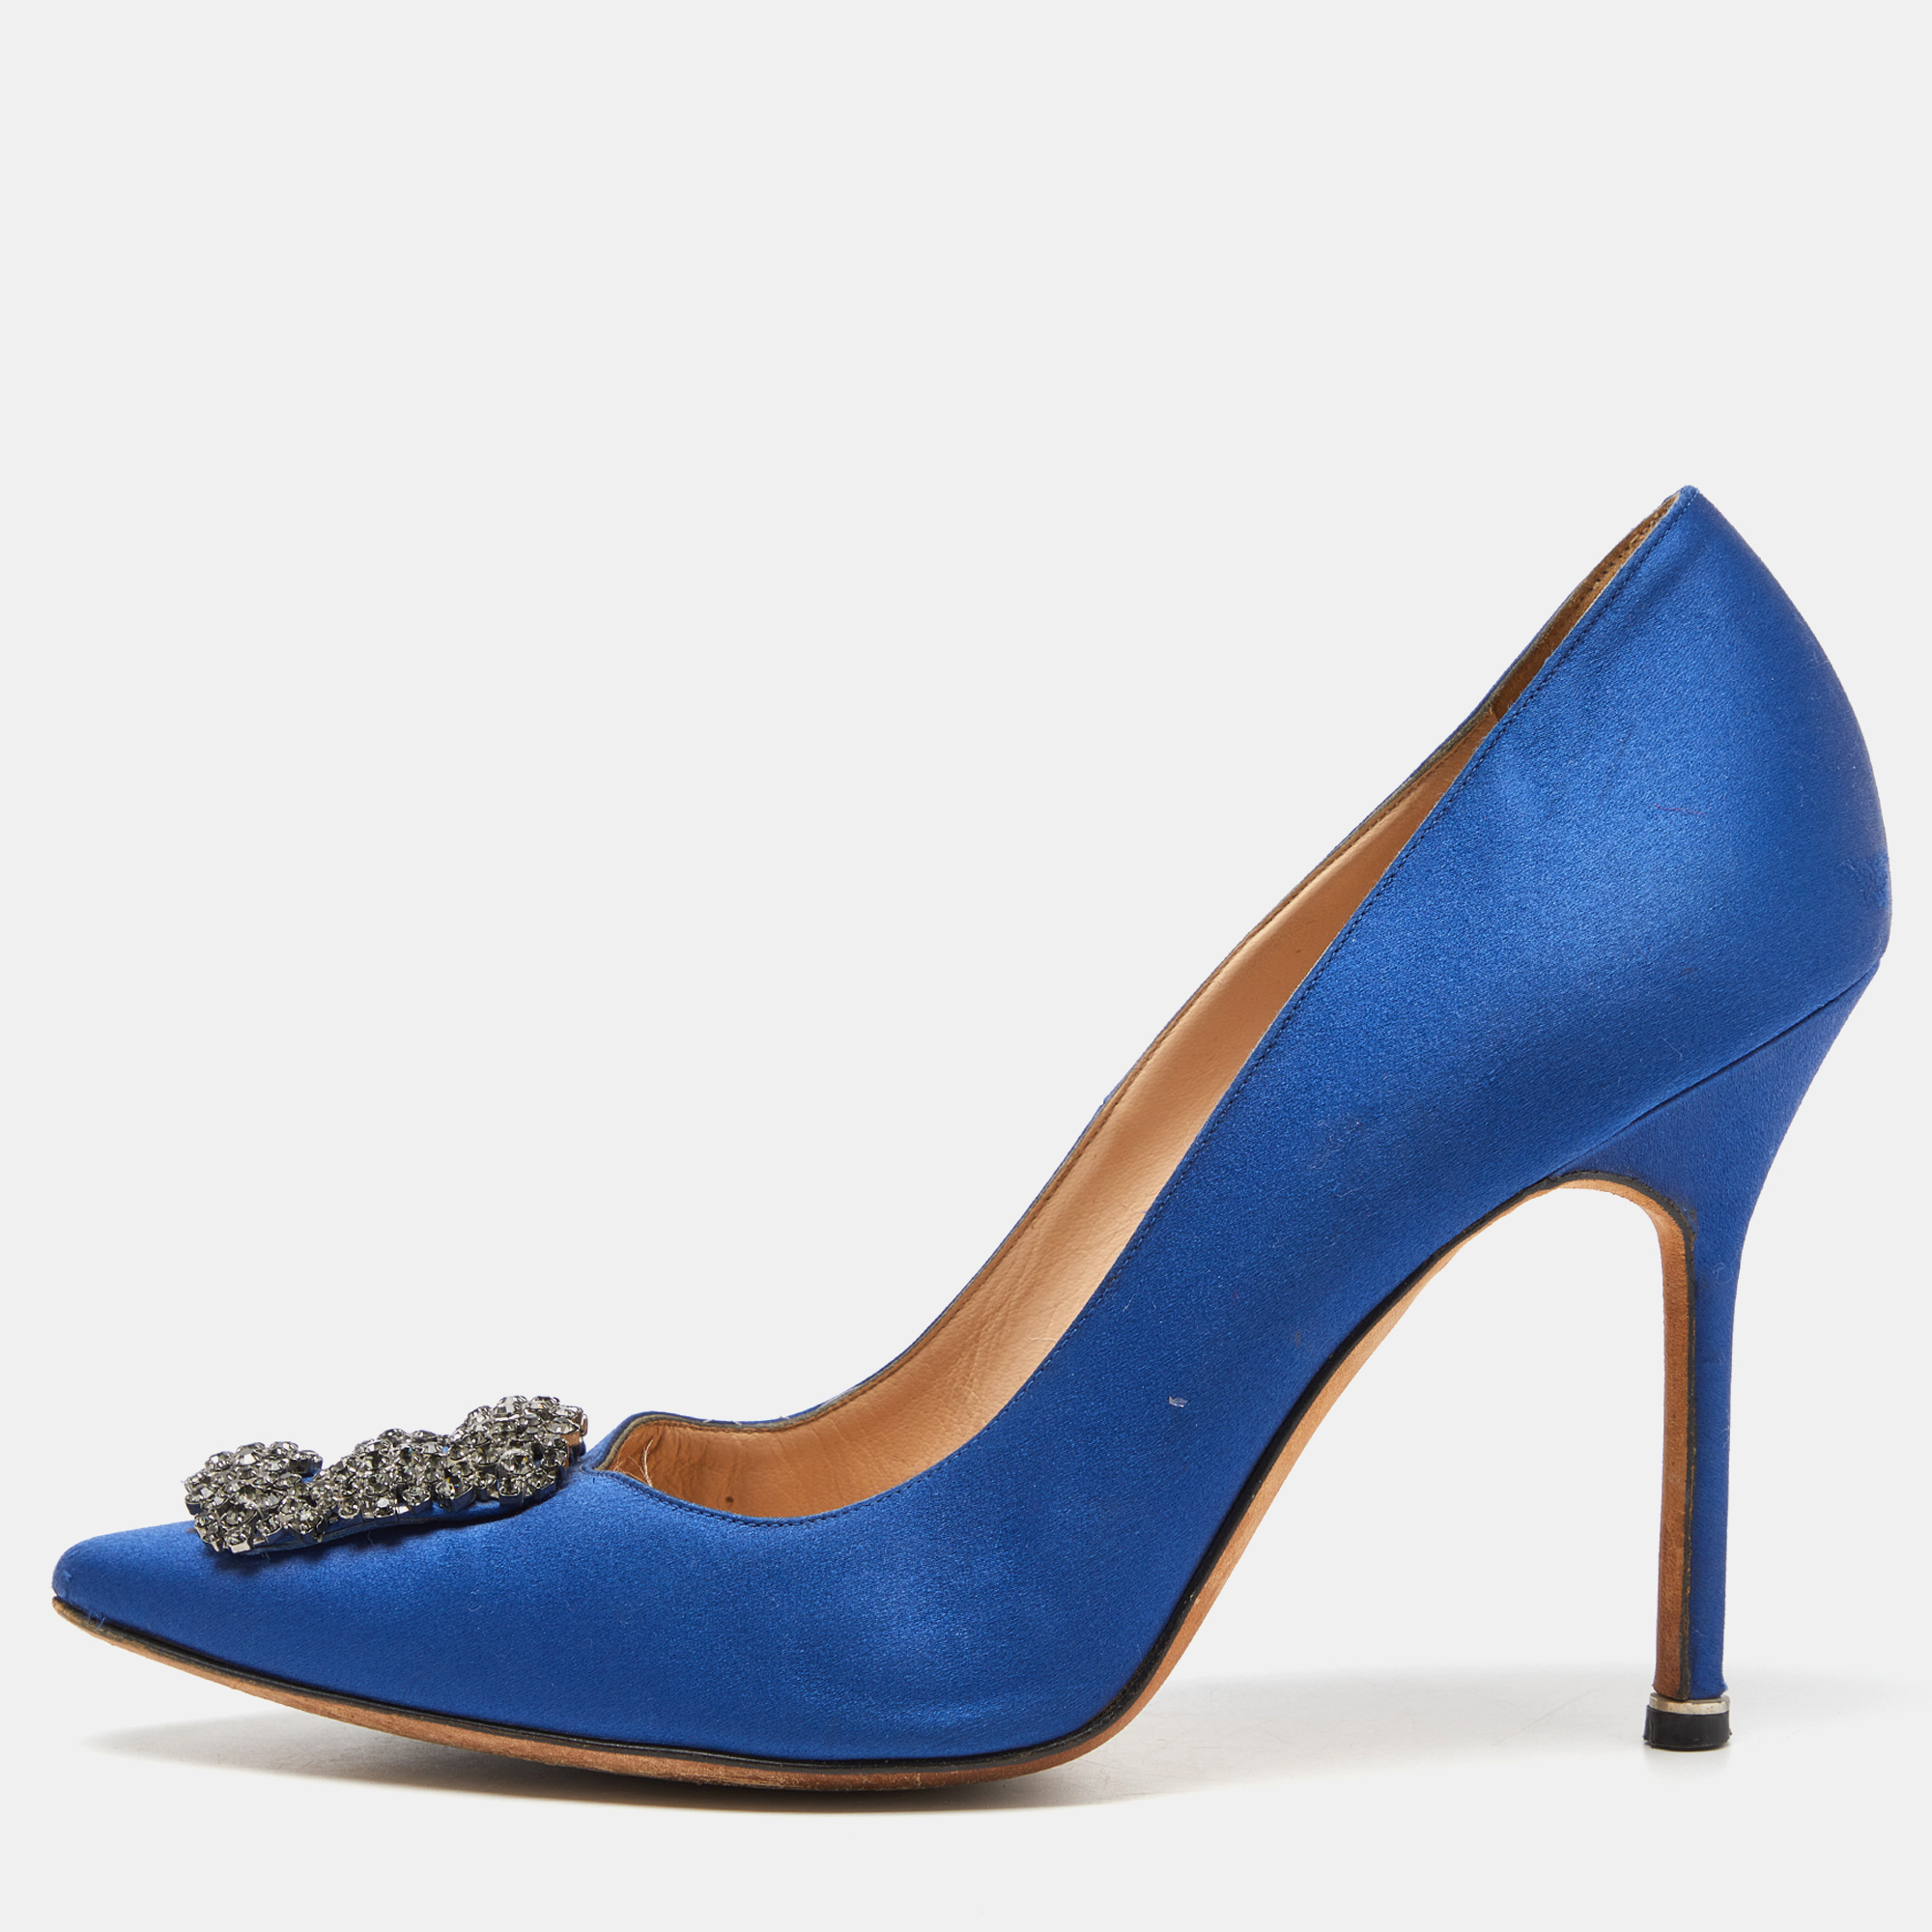 Manolo blahnik blue satin hangisi crystal embellished pointed toe pumps size 41